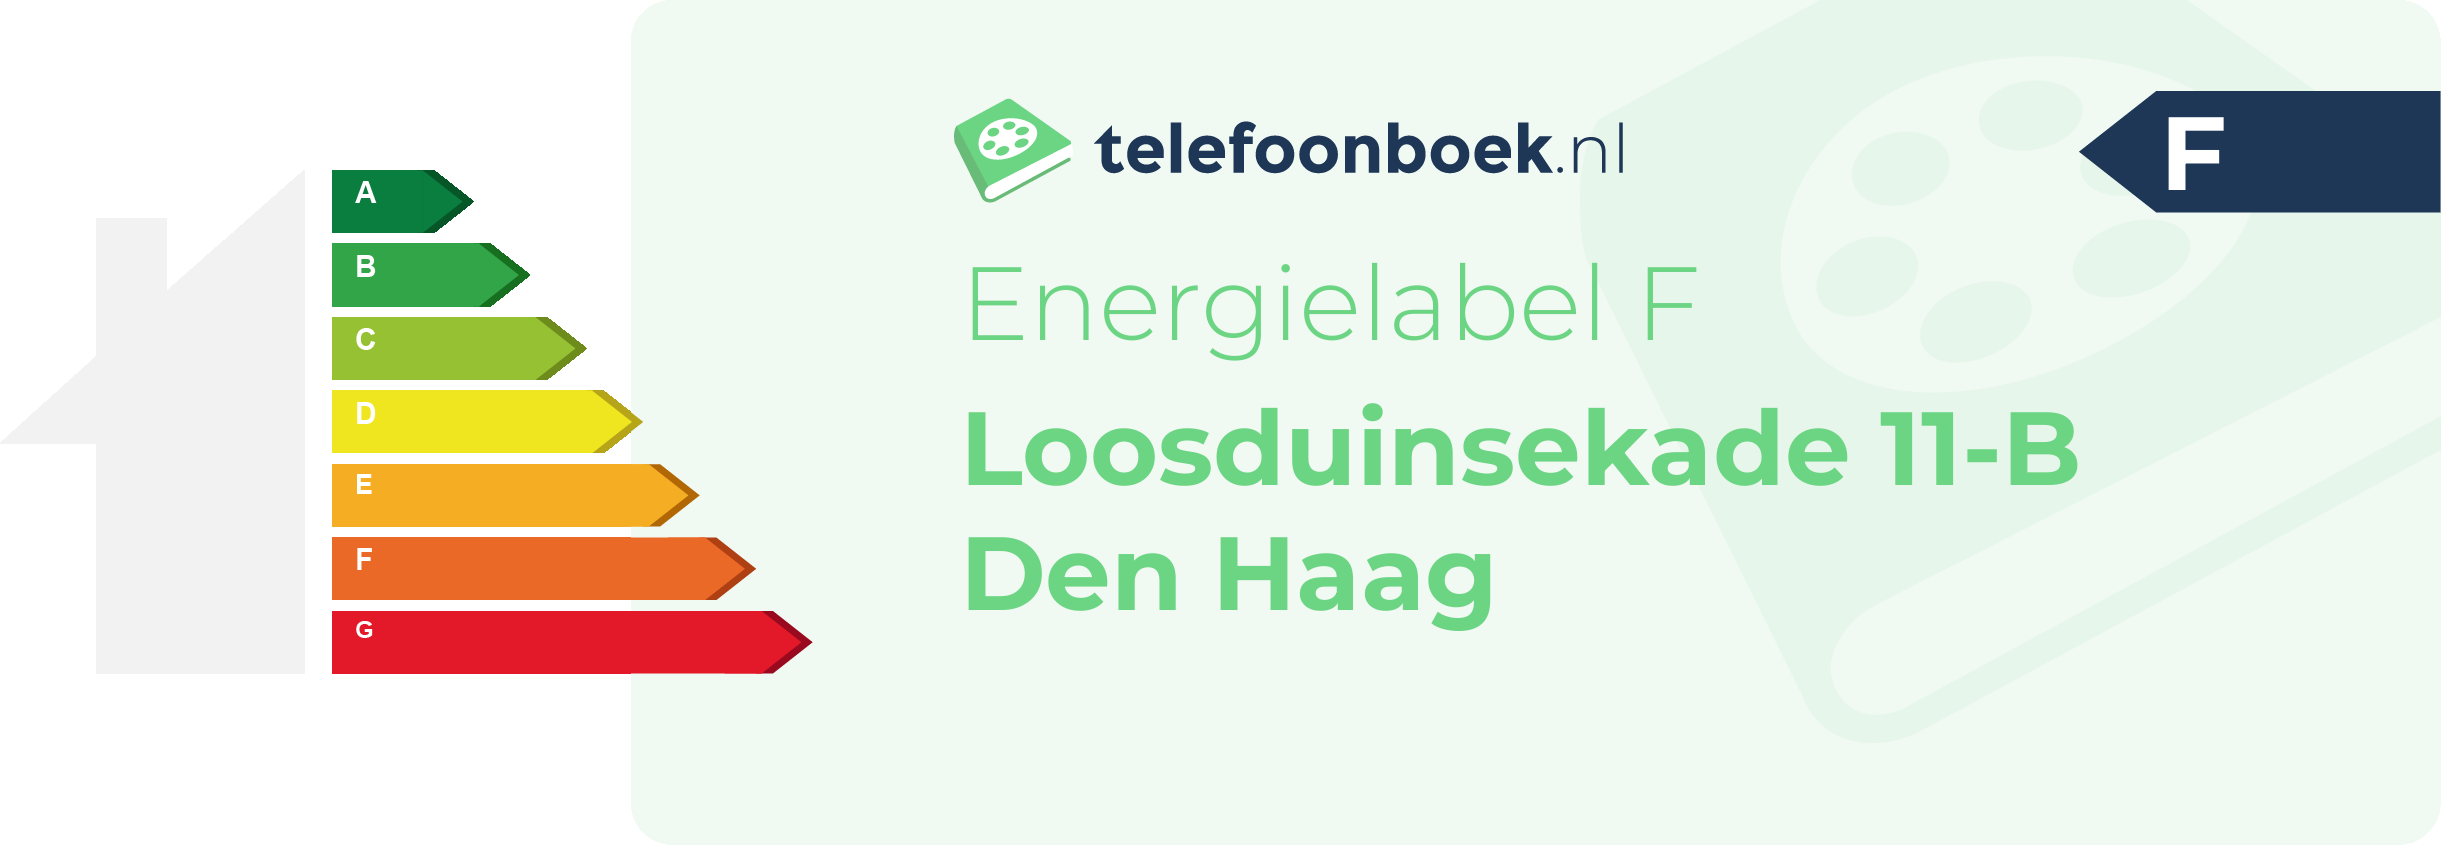 Energielabel Loosduinsekade 11-B Den Haag